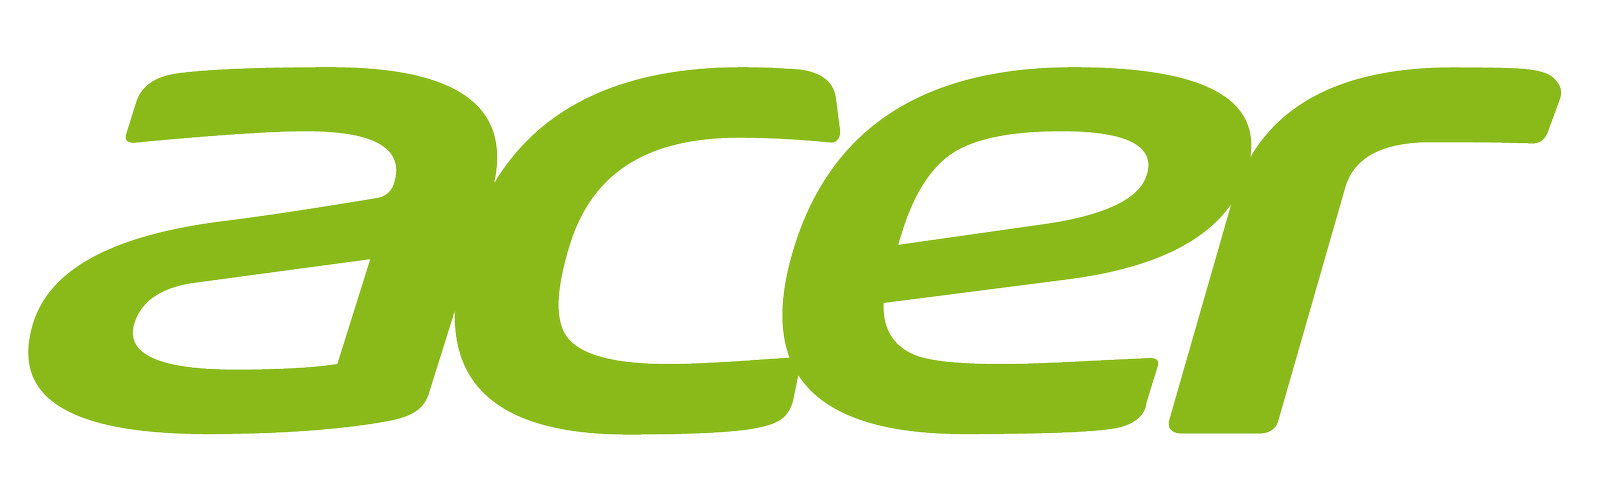 ACEP Logo photo - 1